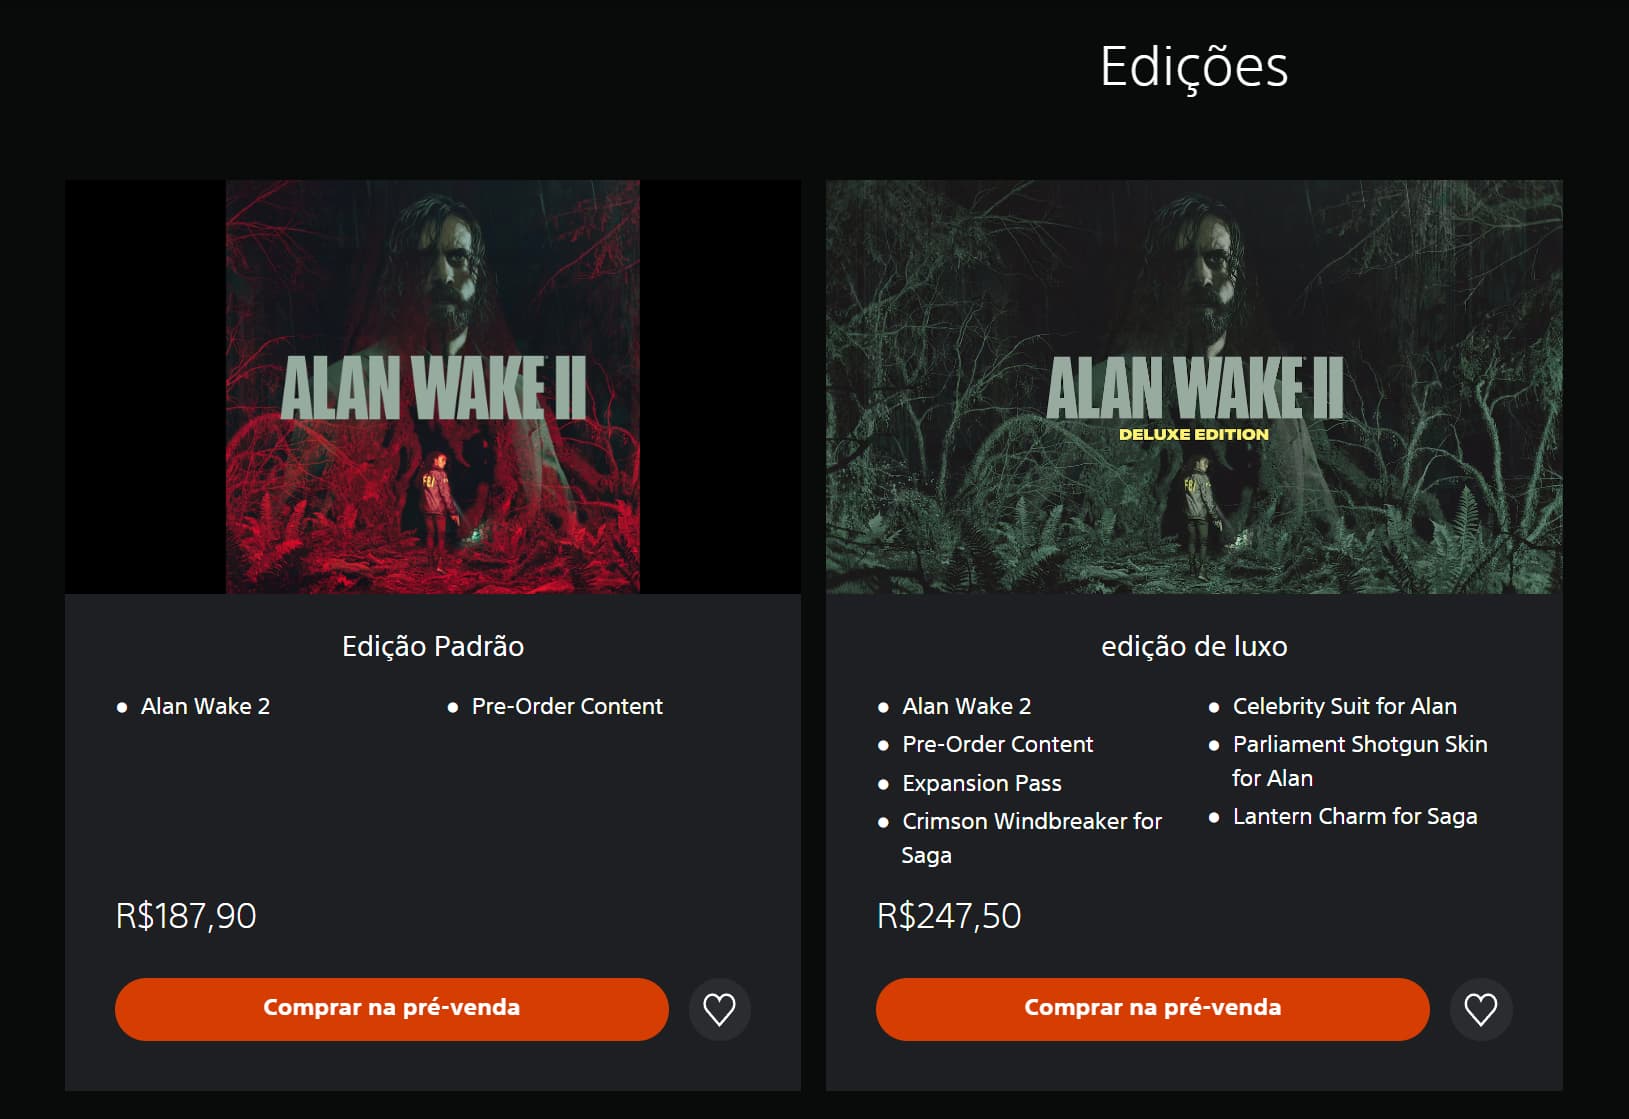 Alan Wake 2 preço